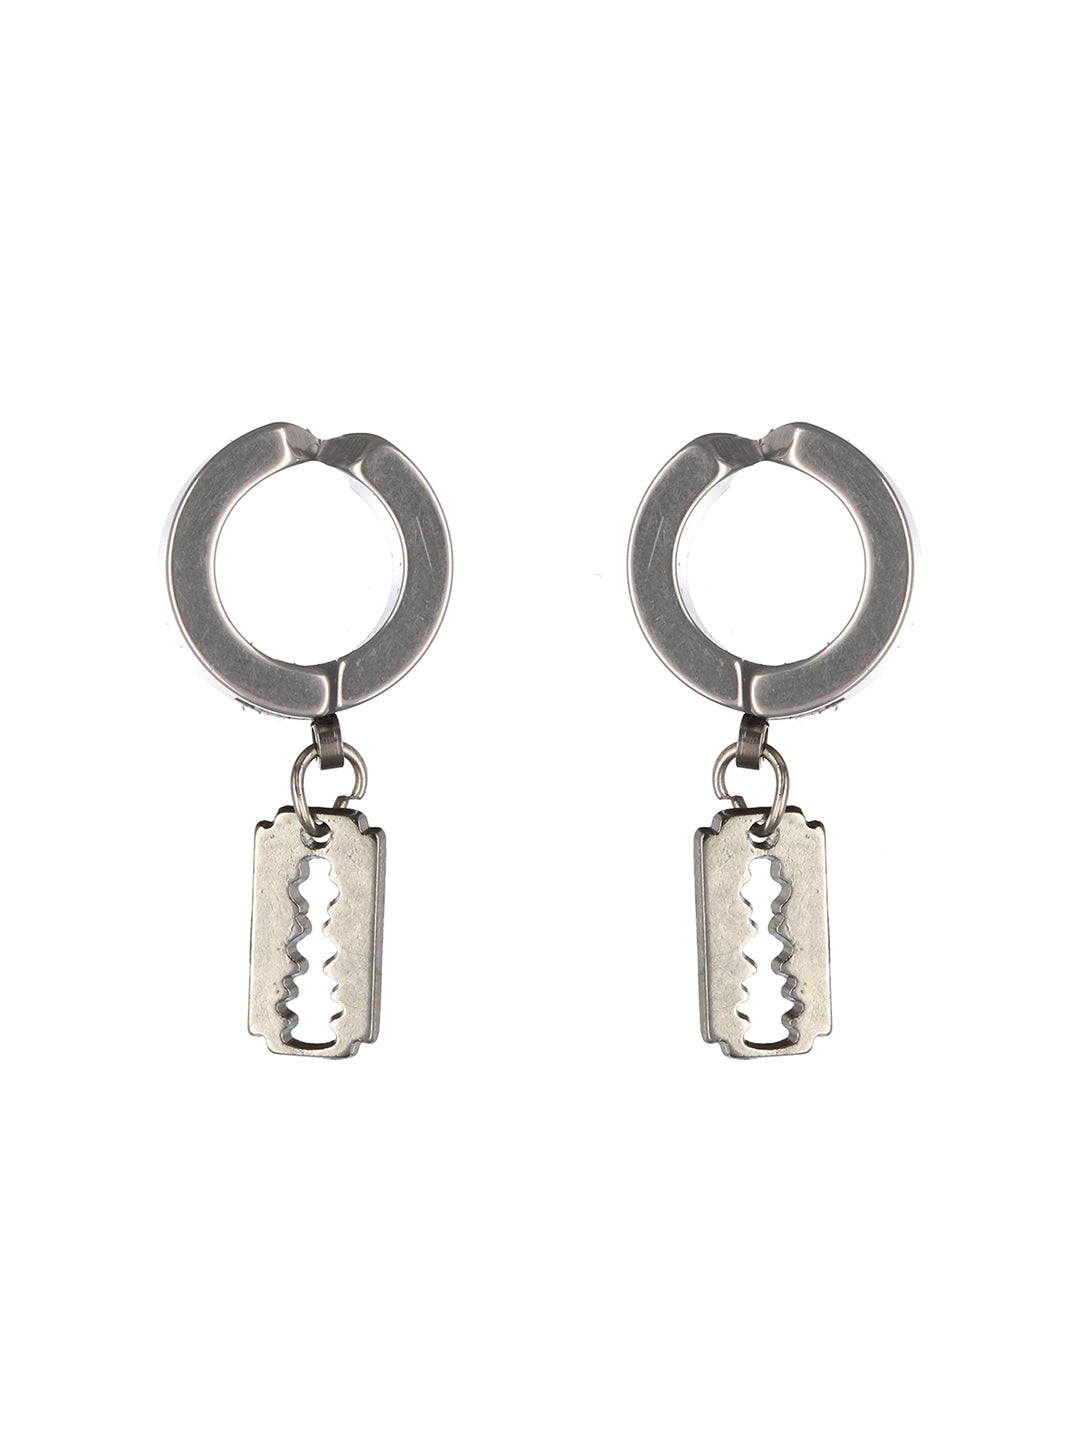 Amazon.com: Small Sterling Silver Hoop Earrings for Women, 8mm Tiny  Cartilage Hoop Earrings, 22 Gauge : Handmade Products